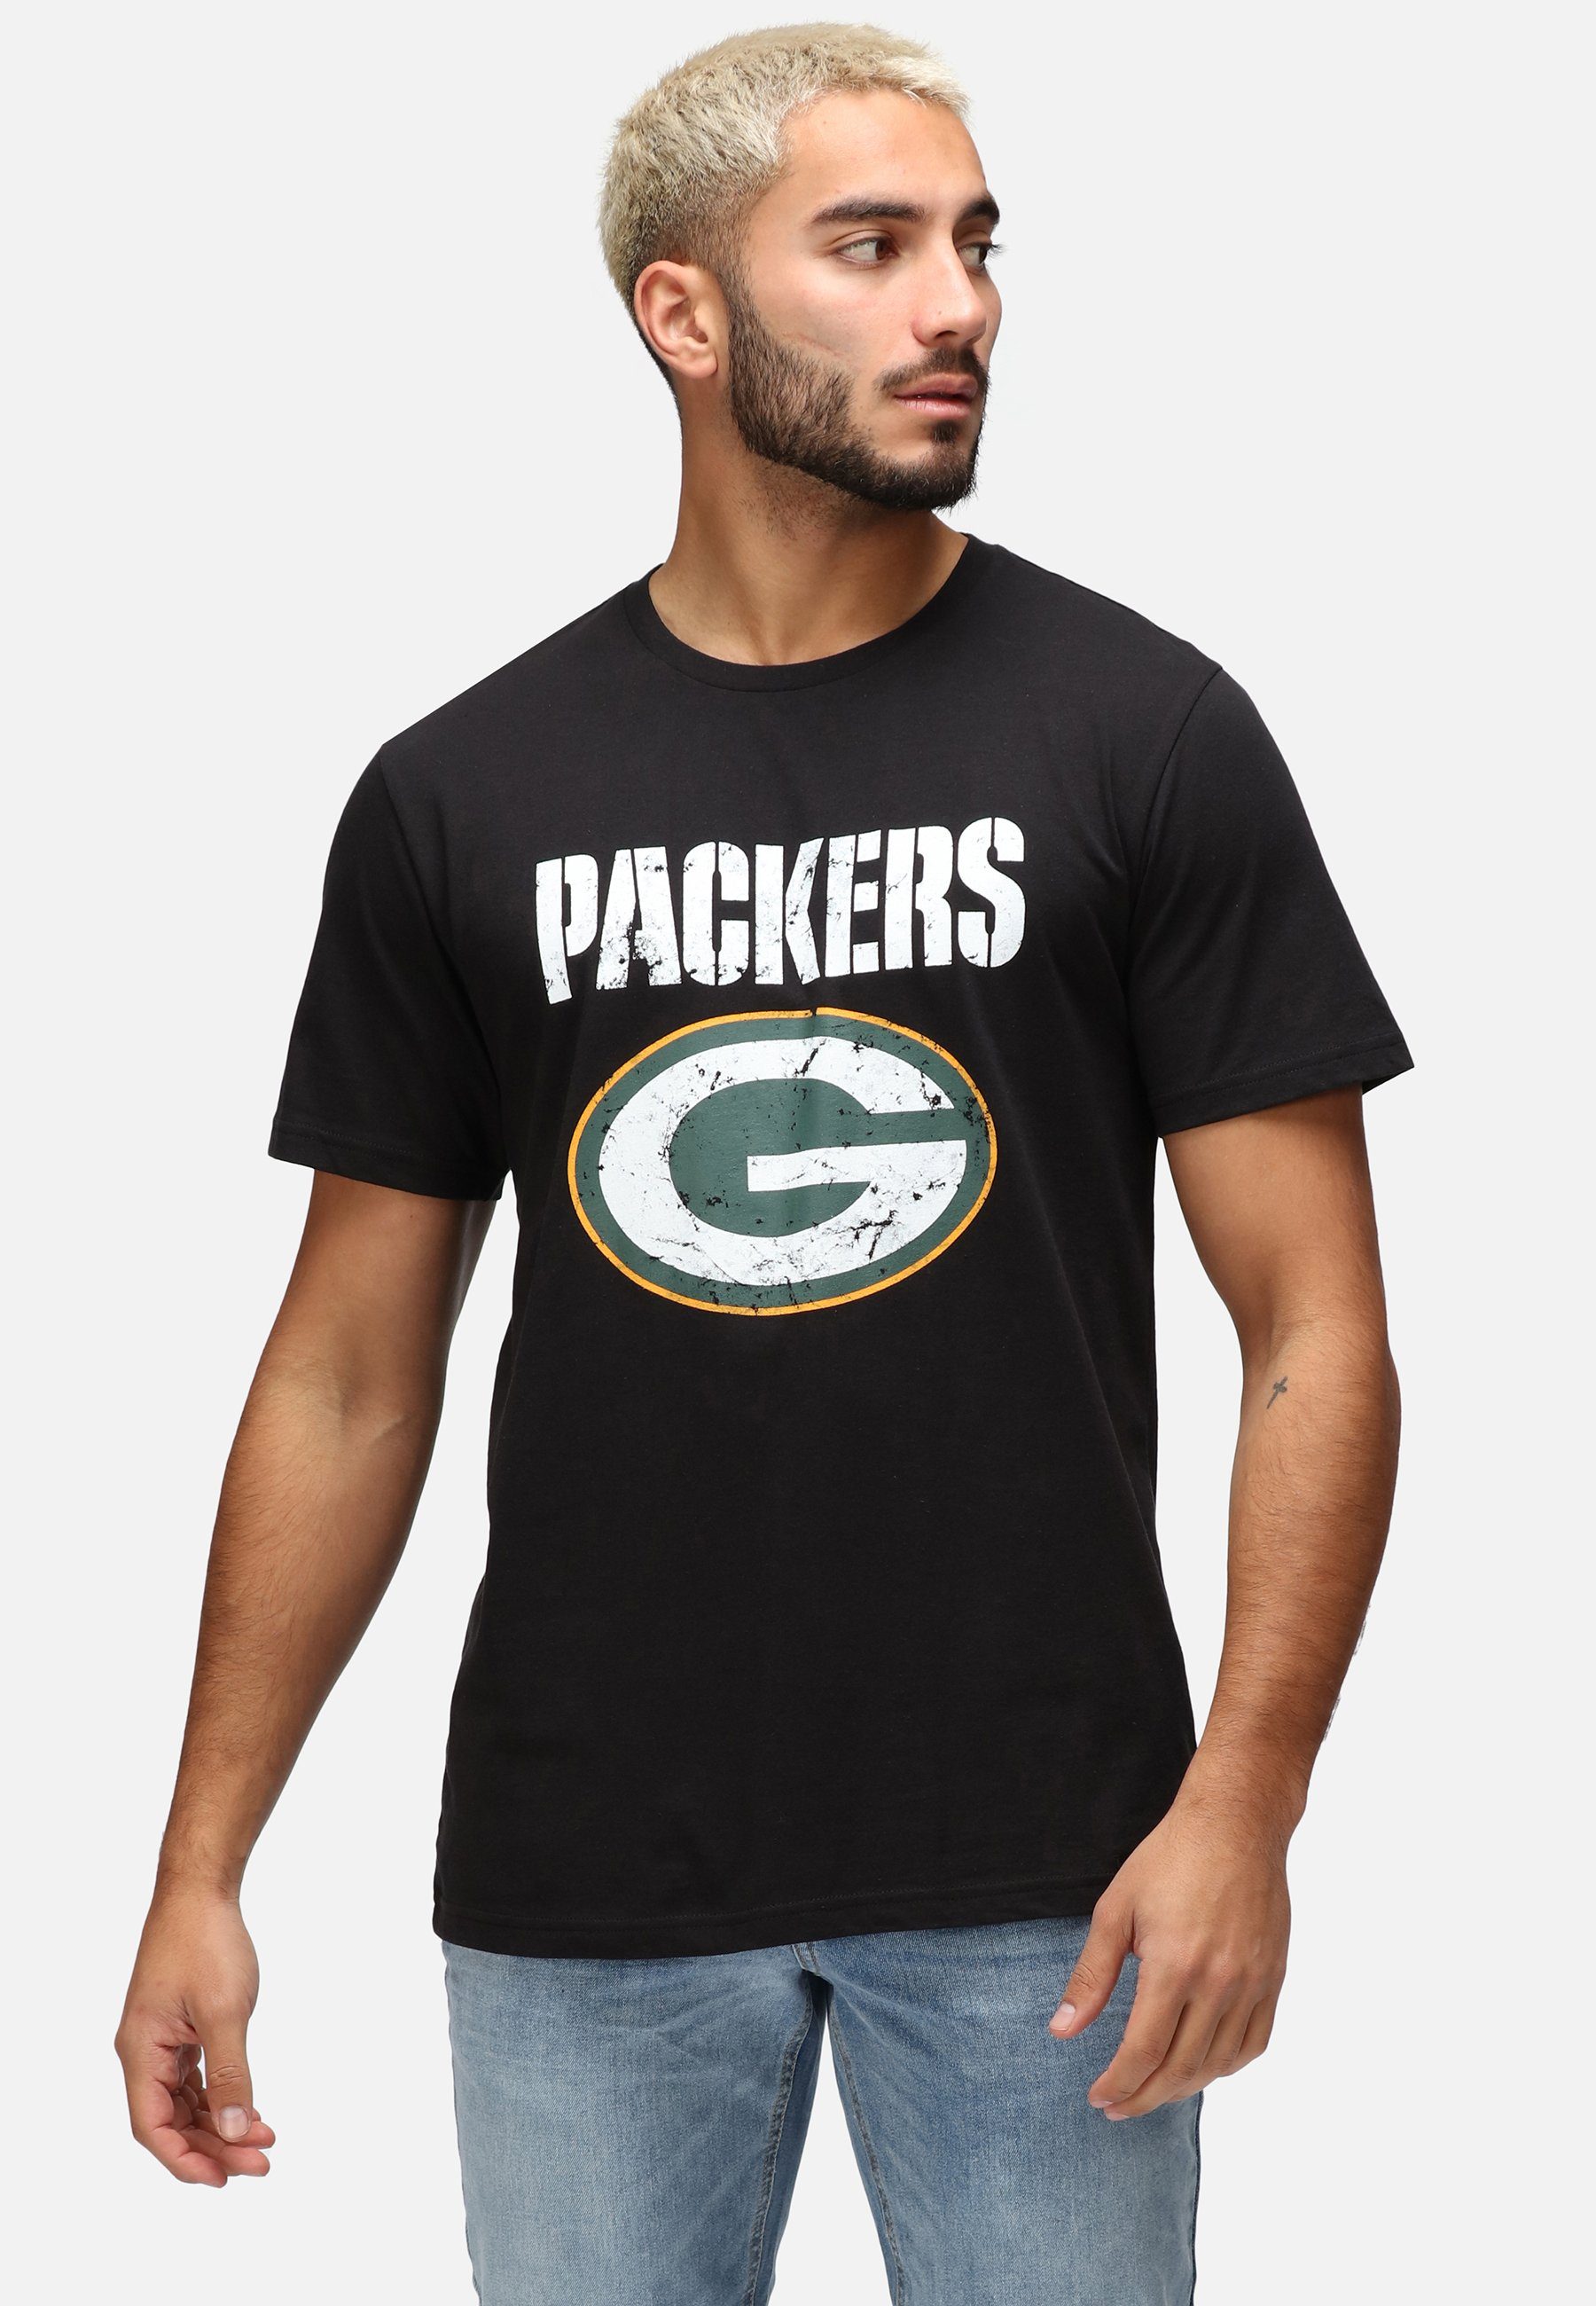 LOGO Recovered zertifizierte Bio-Baumwolle PACKERS GOTS T-Shirt NFL